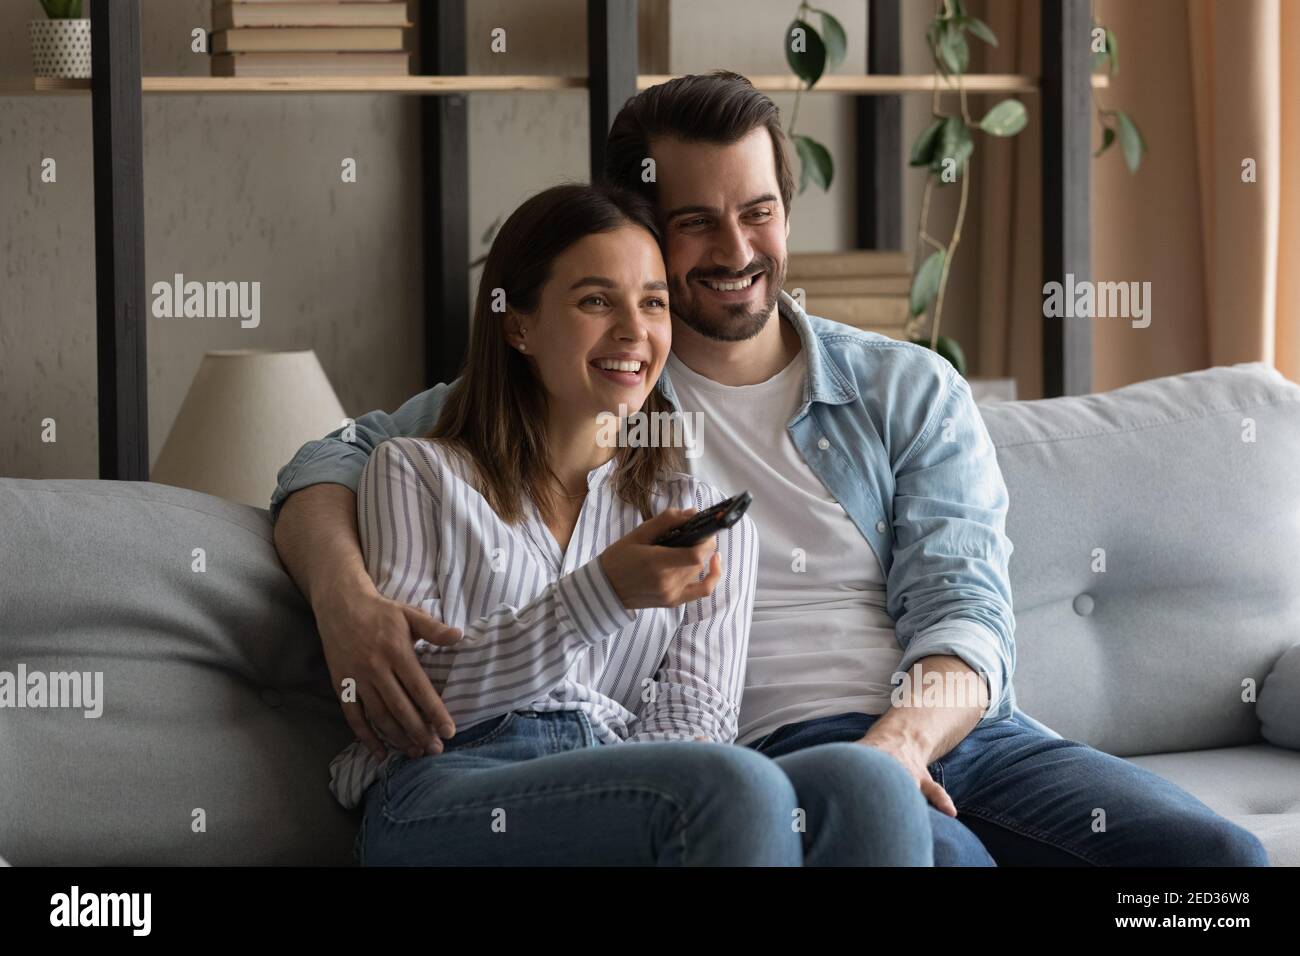 Bonding millennial couple hugging on sofa watching movie on tv Stock Photo